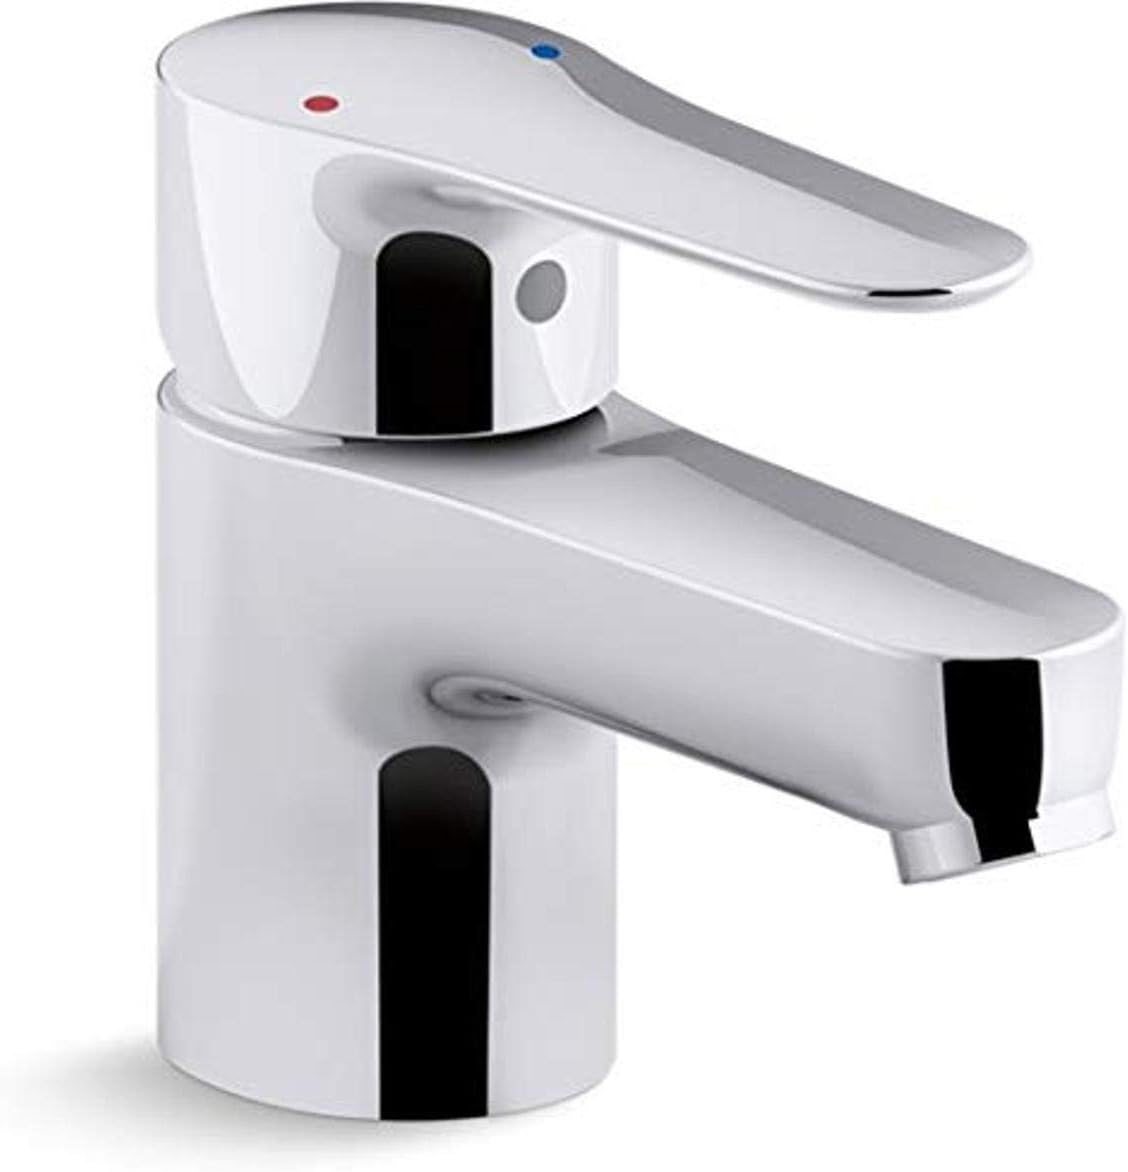 Kohler Single-Handle Commercial Bathroom Sink Faucet Without Drain, Chrome - $50